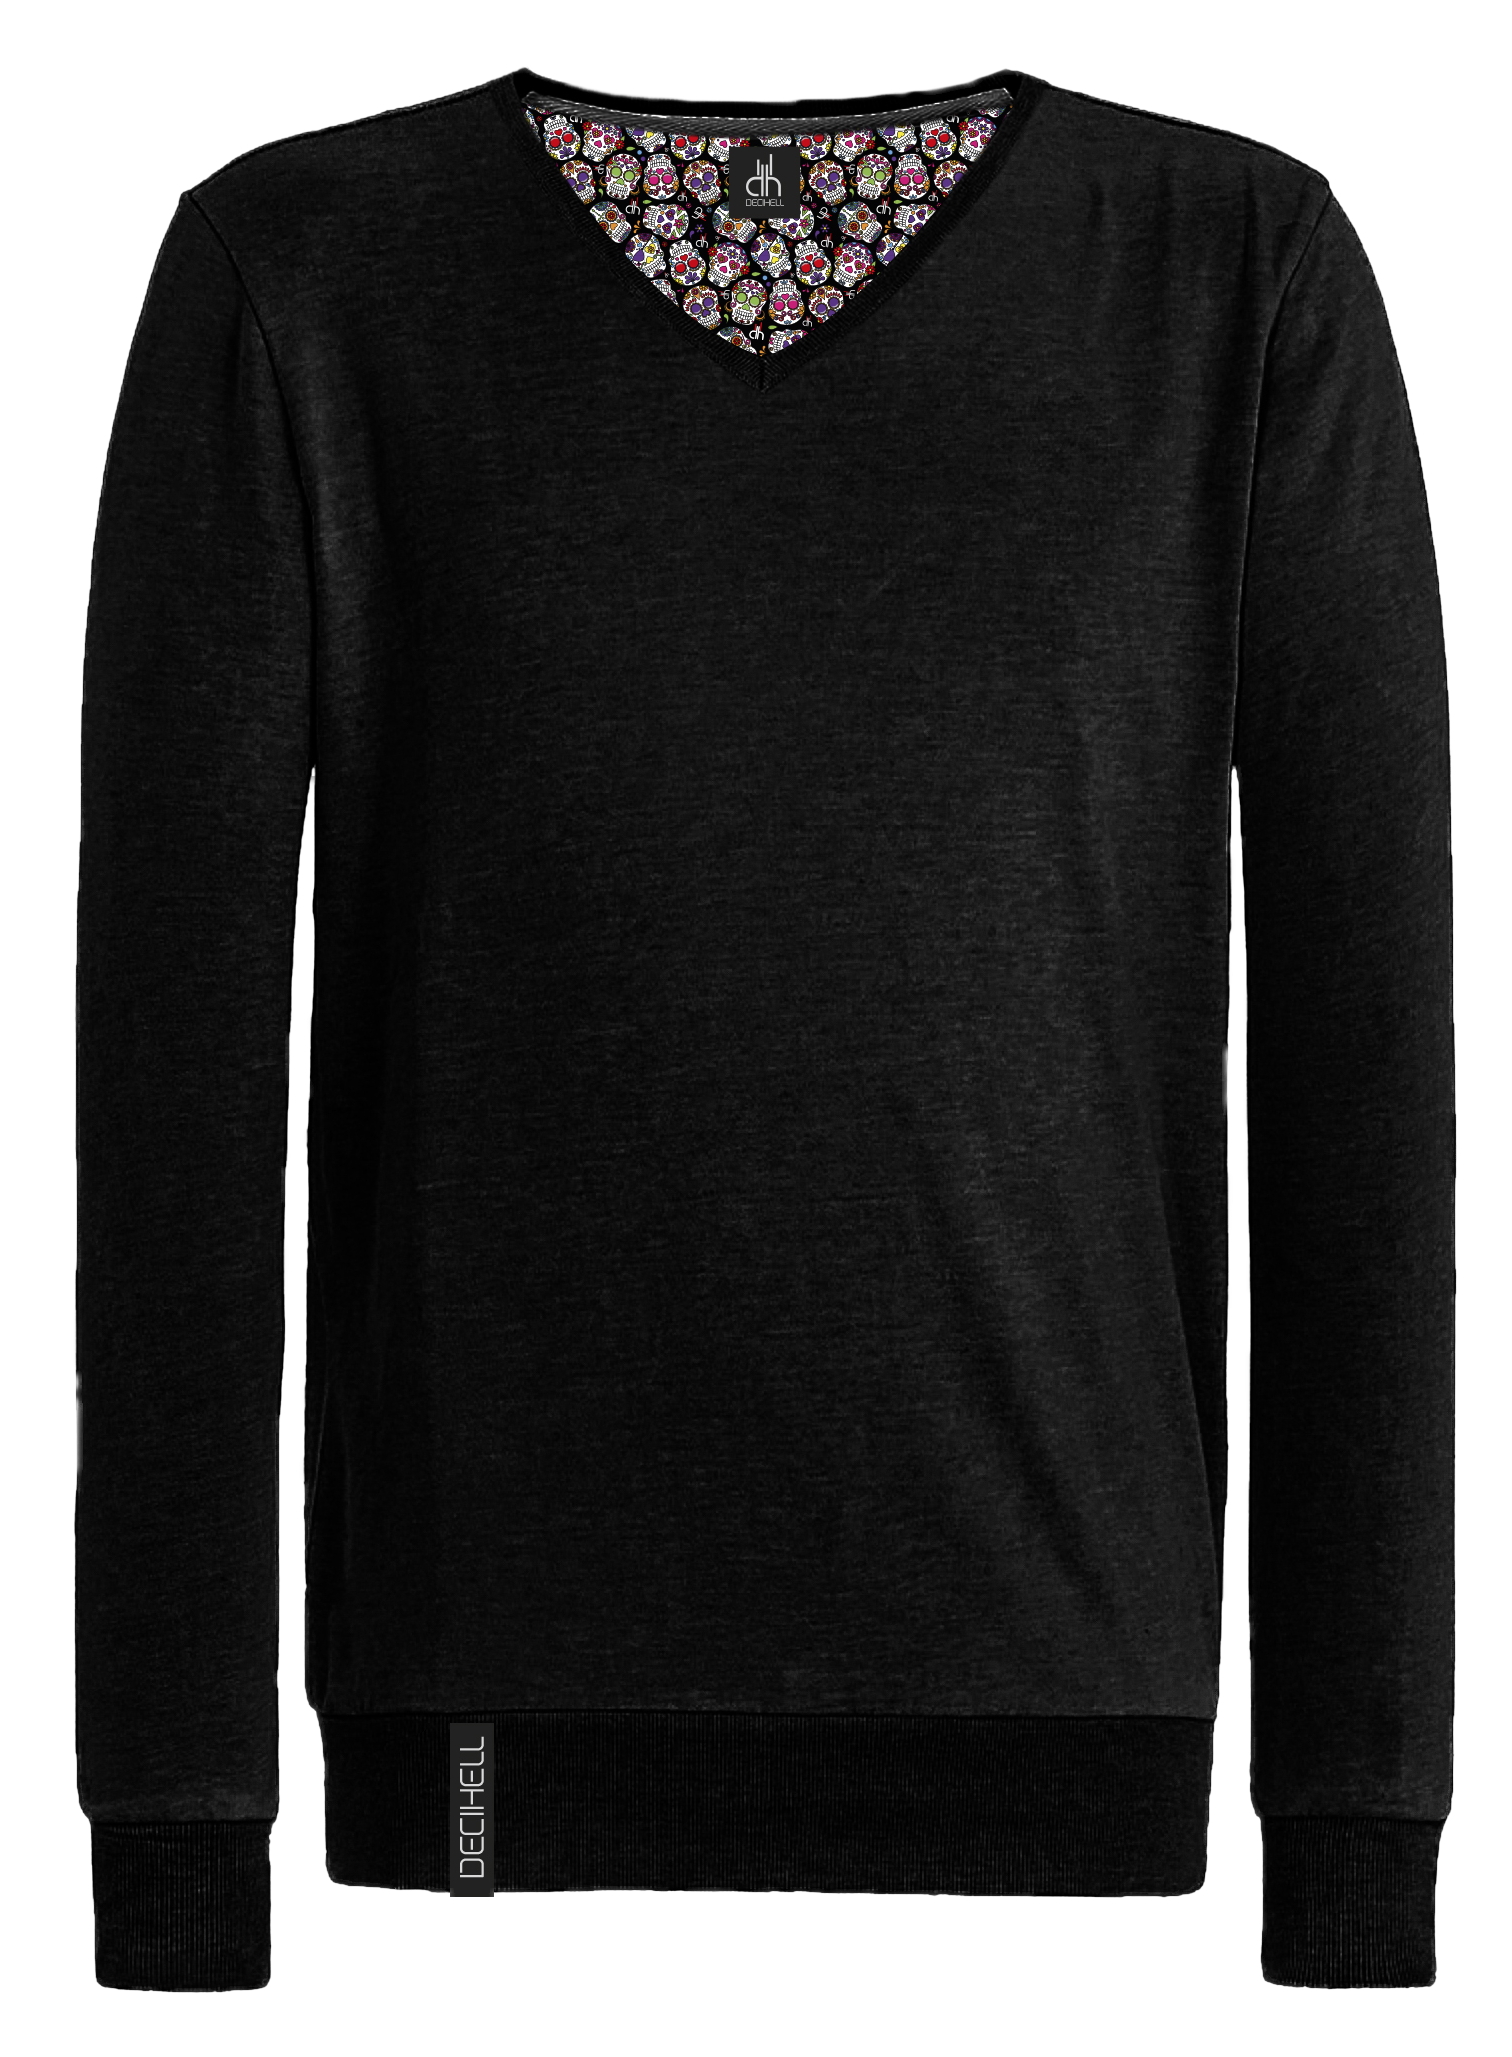 Sweater | black | Black Skull Größe: 5X(HEL)L / Material: 100% Baumwolle